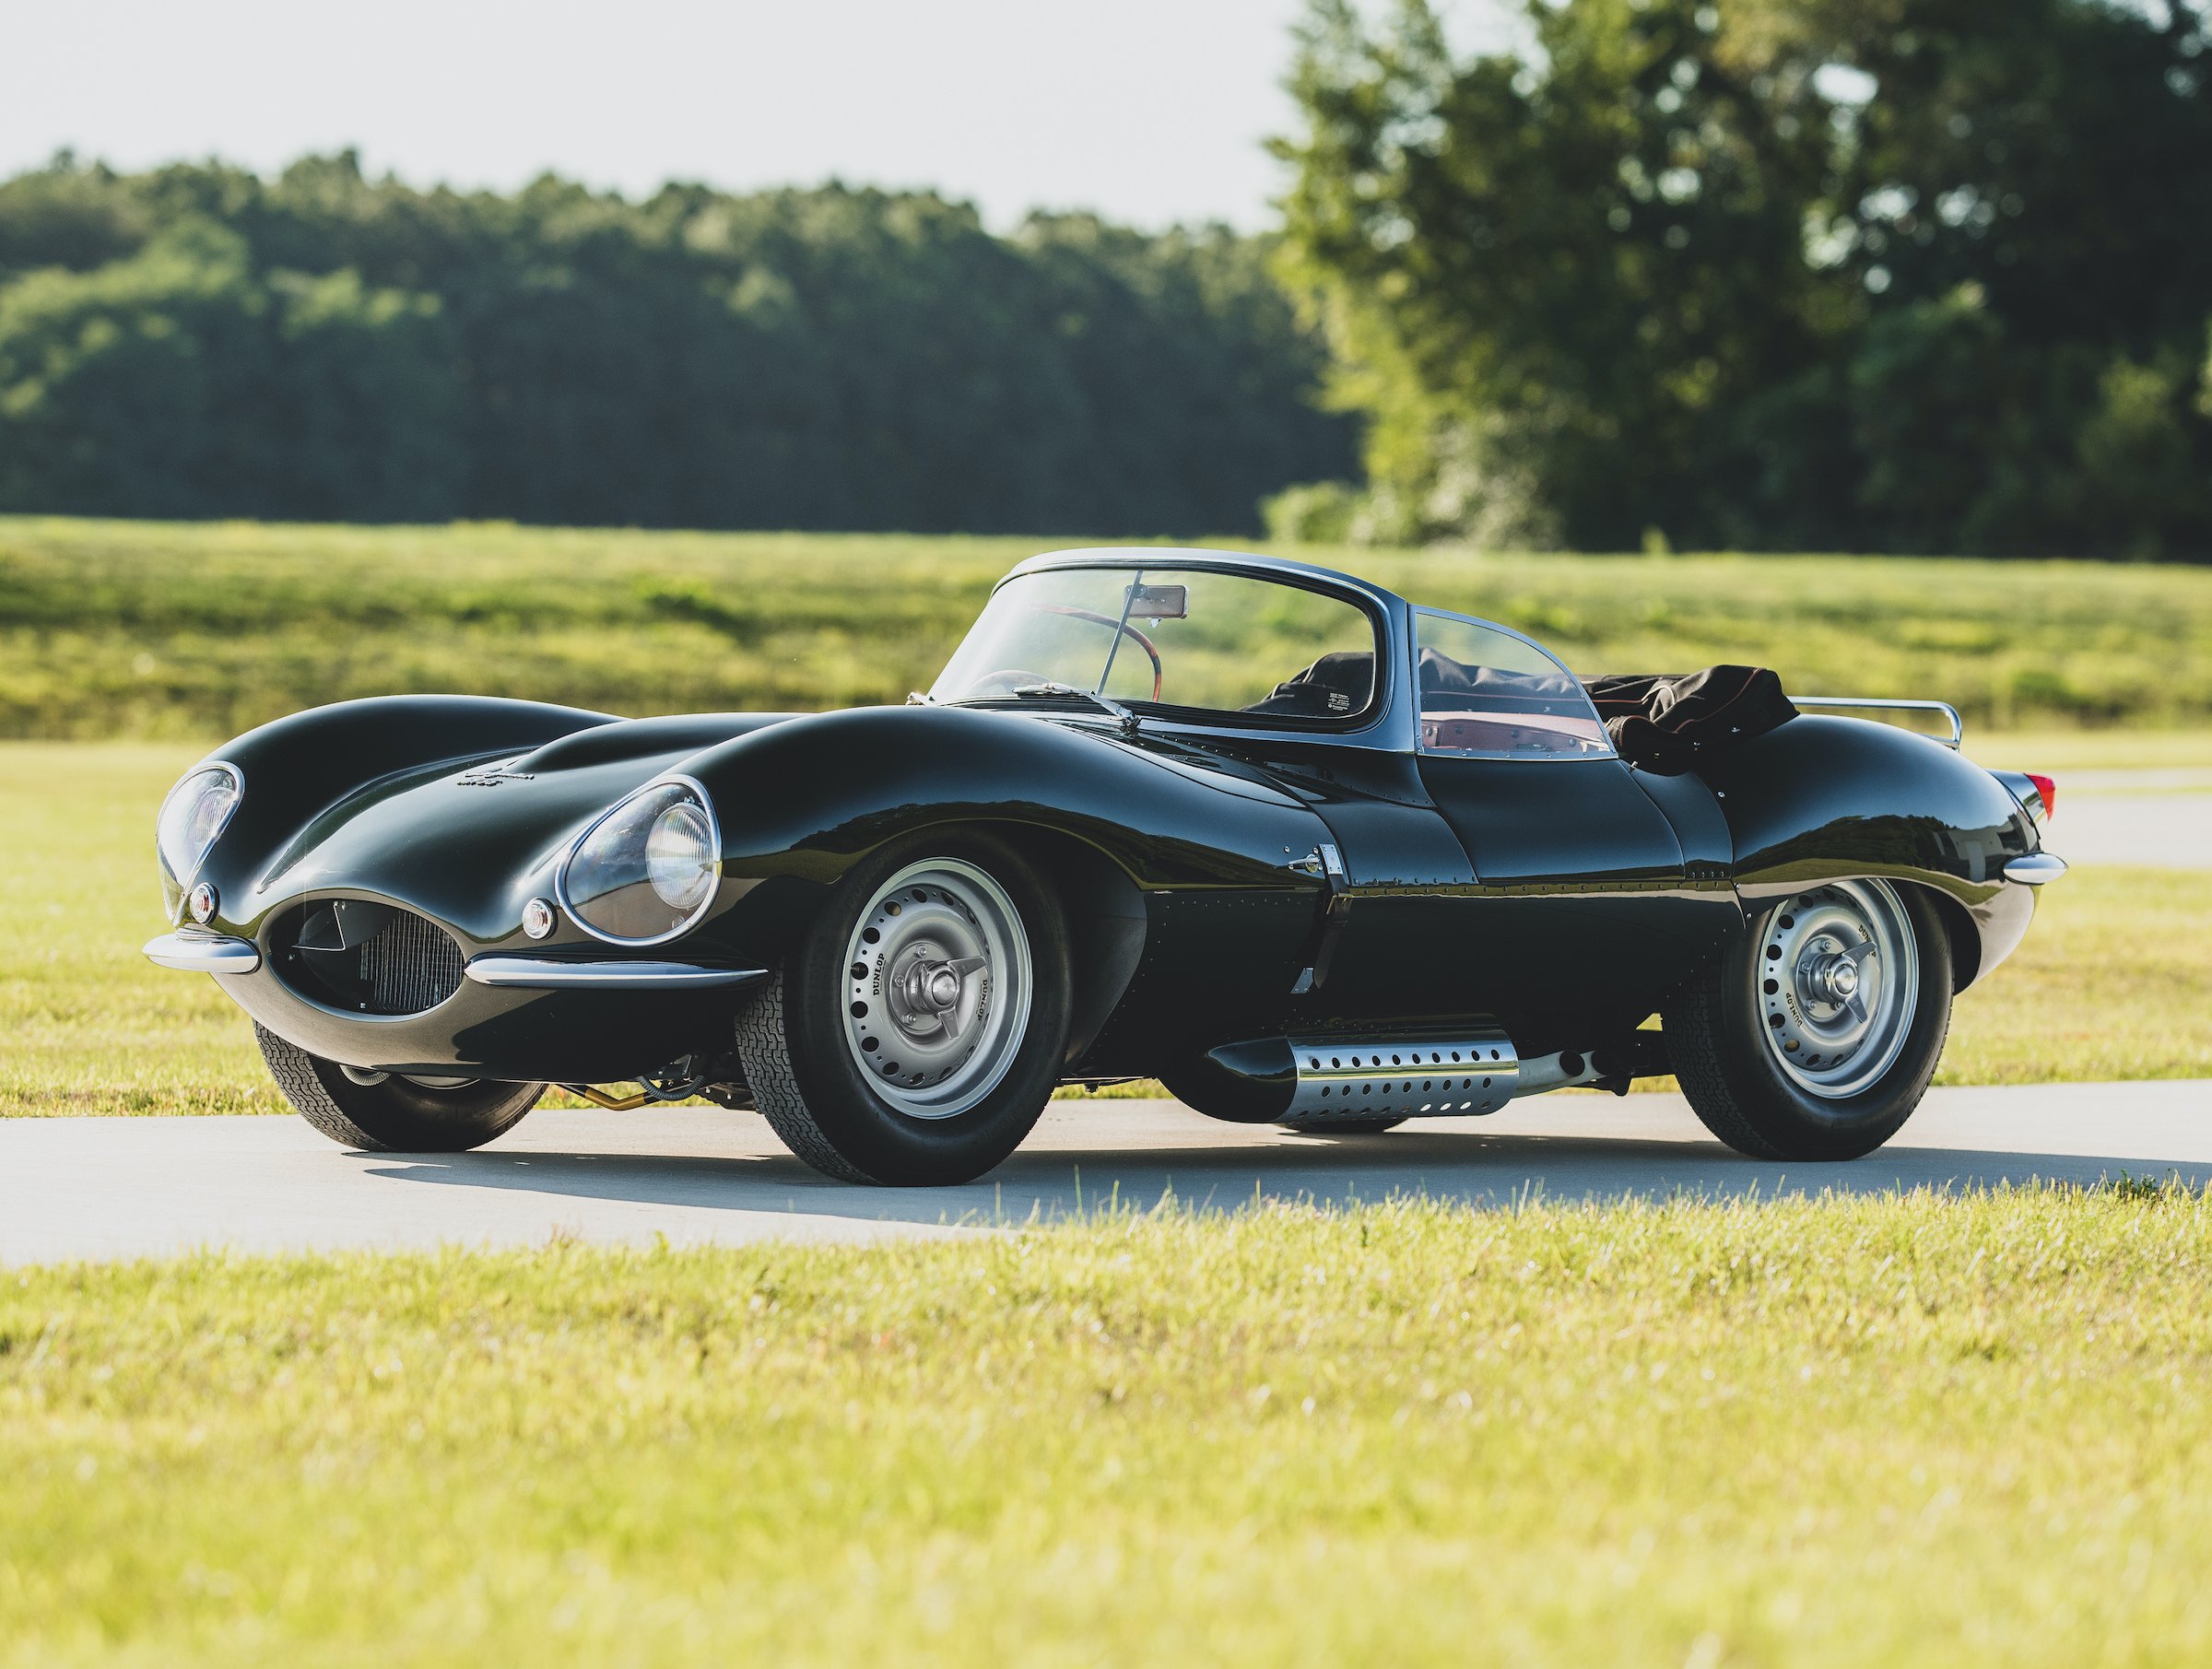 Jaguar C-Type continuation car brings back 1950s racing icon